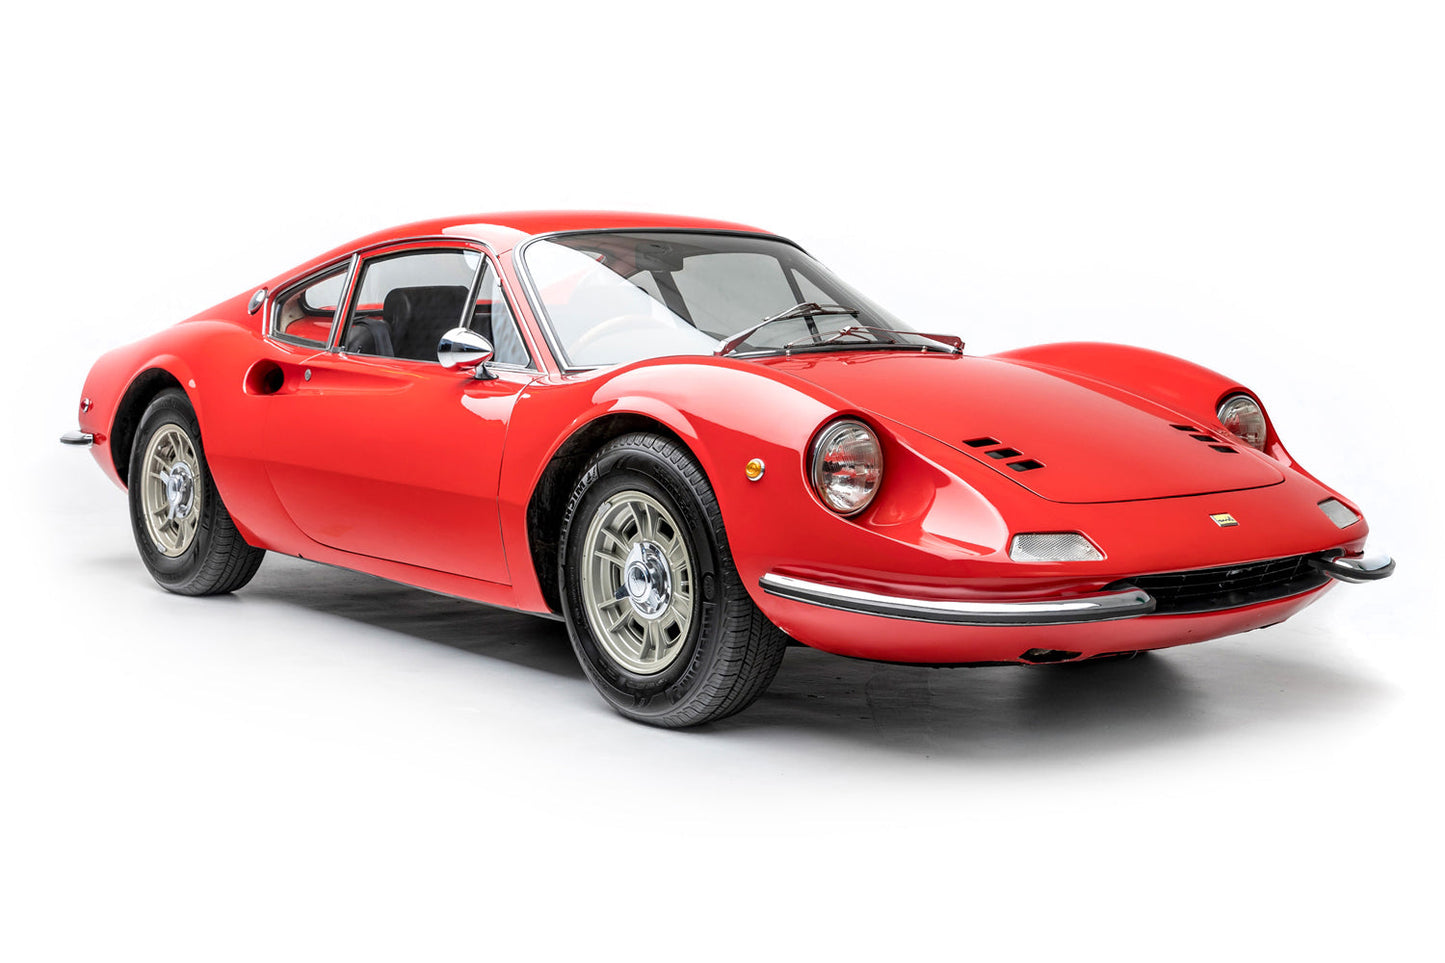 Ferrari 206 GT Dino - Stainless Steel Manifolds (1968-69) - QuickSilver Exhausts